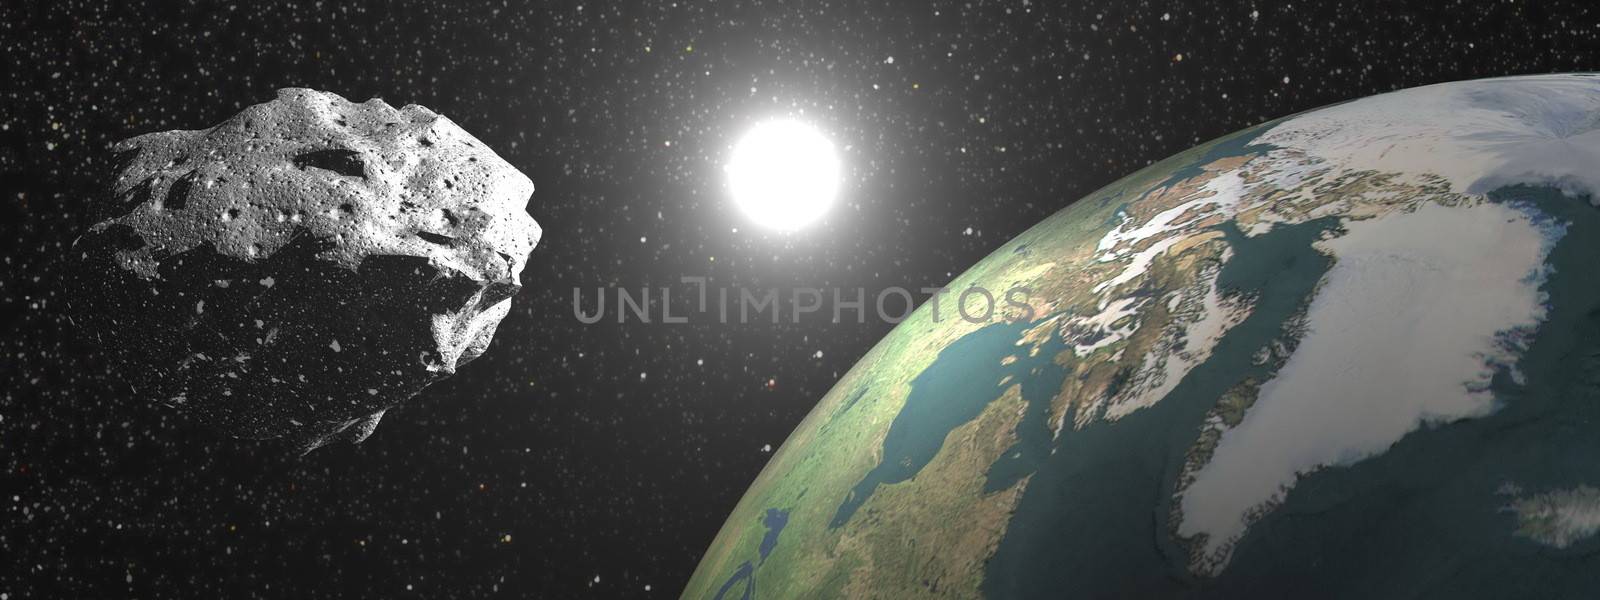 Asteroid near earth - 3D render by Elenaphotos21